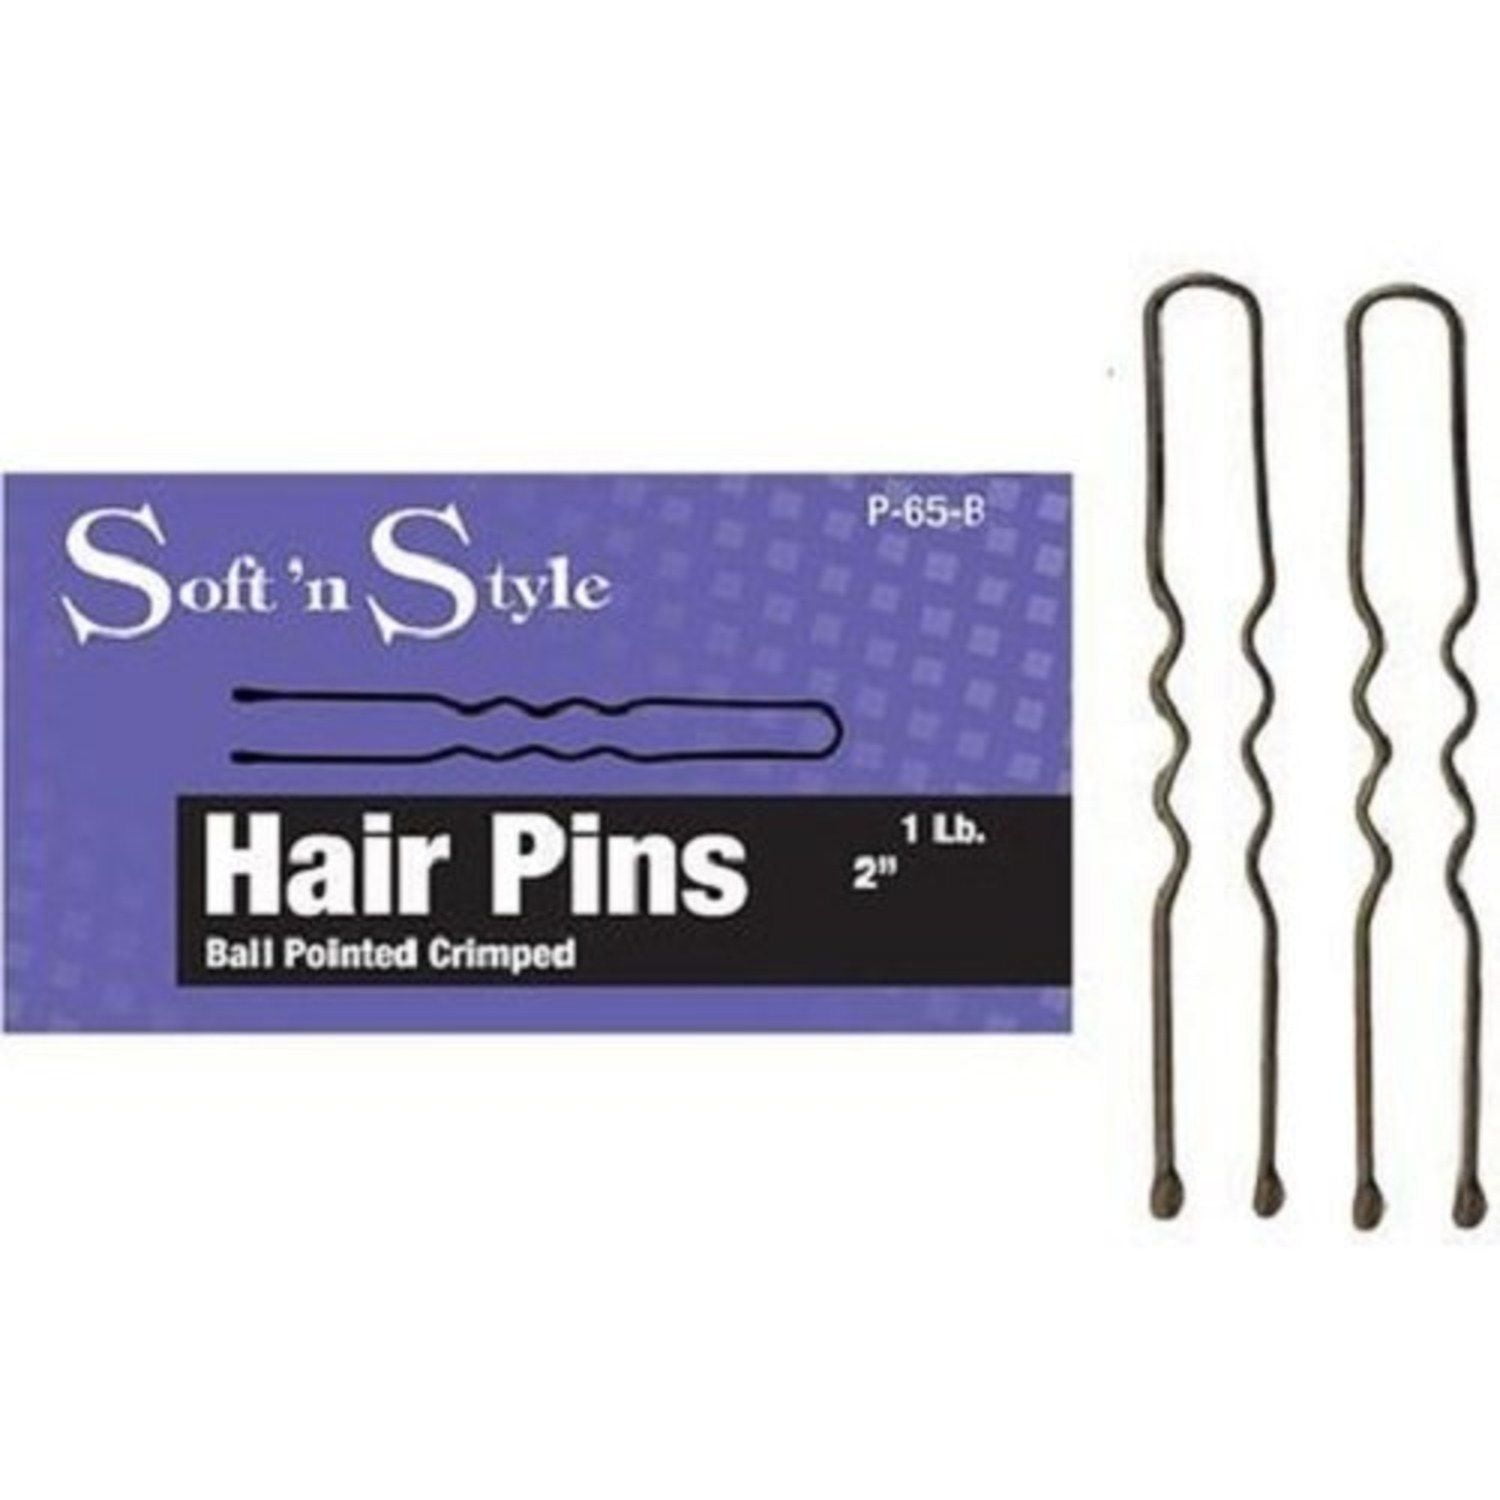 Soft 'N Style Bronze Hair Pin Box, 1 lb [] 